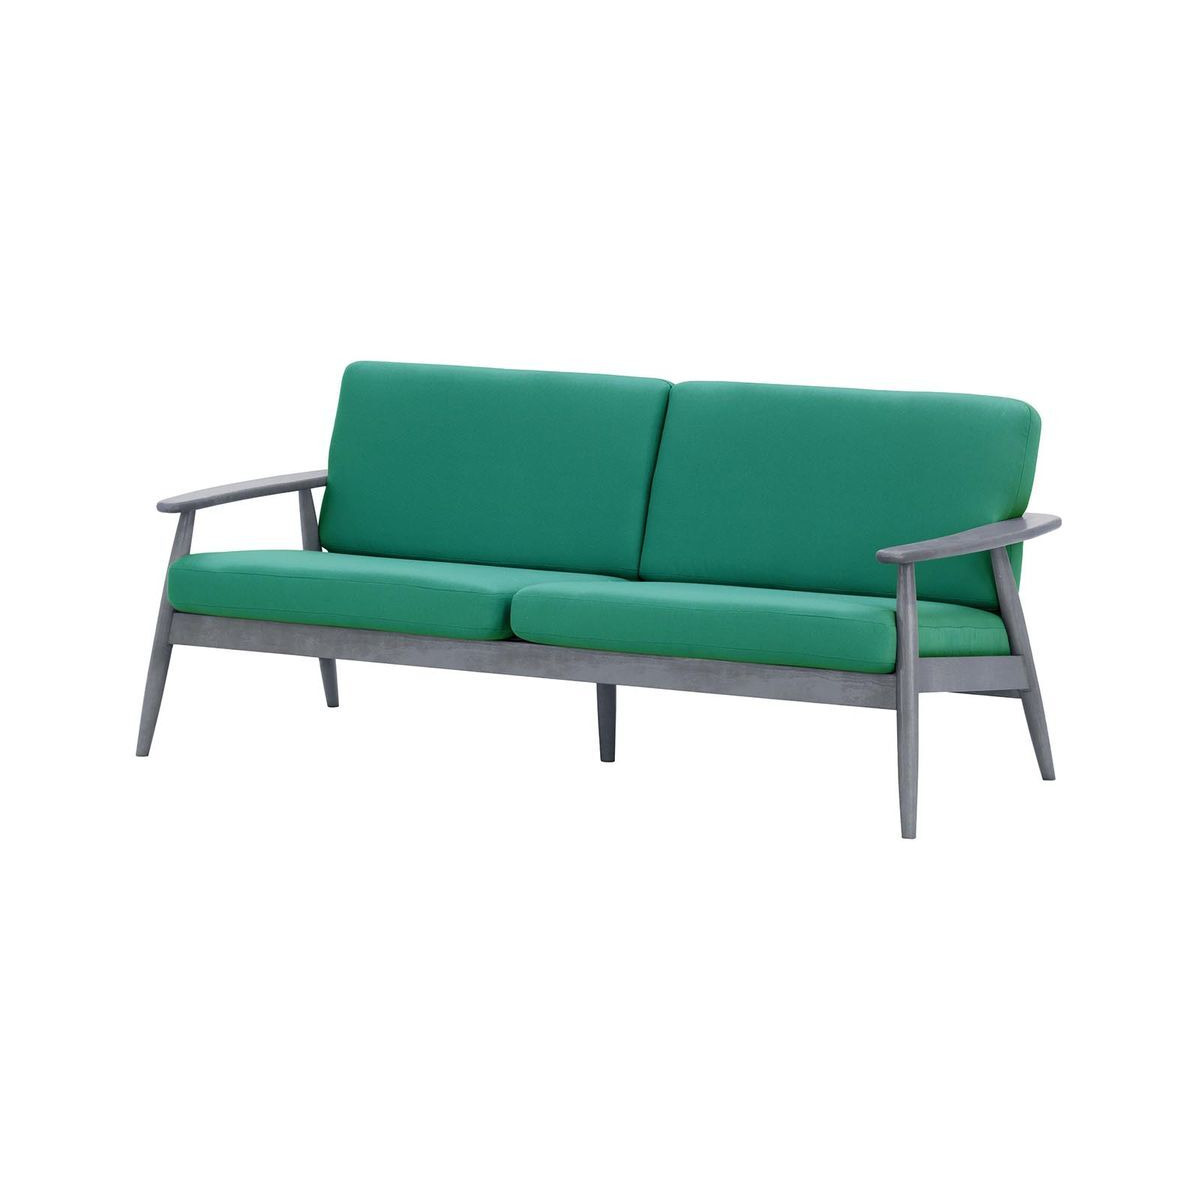 Demure Aqua 3 Seater Garden Sofa, turquoise, Leg colour: 8036 grey - image 1